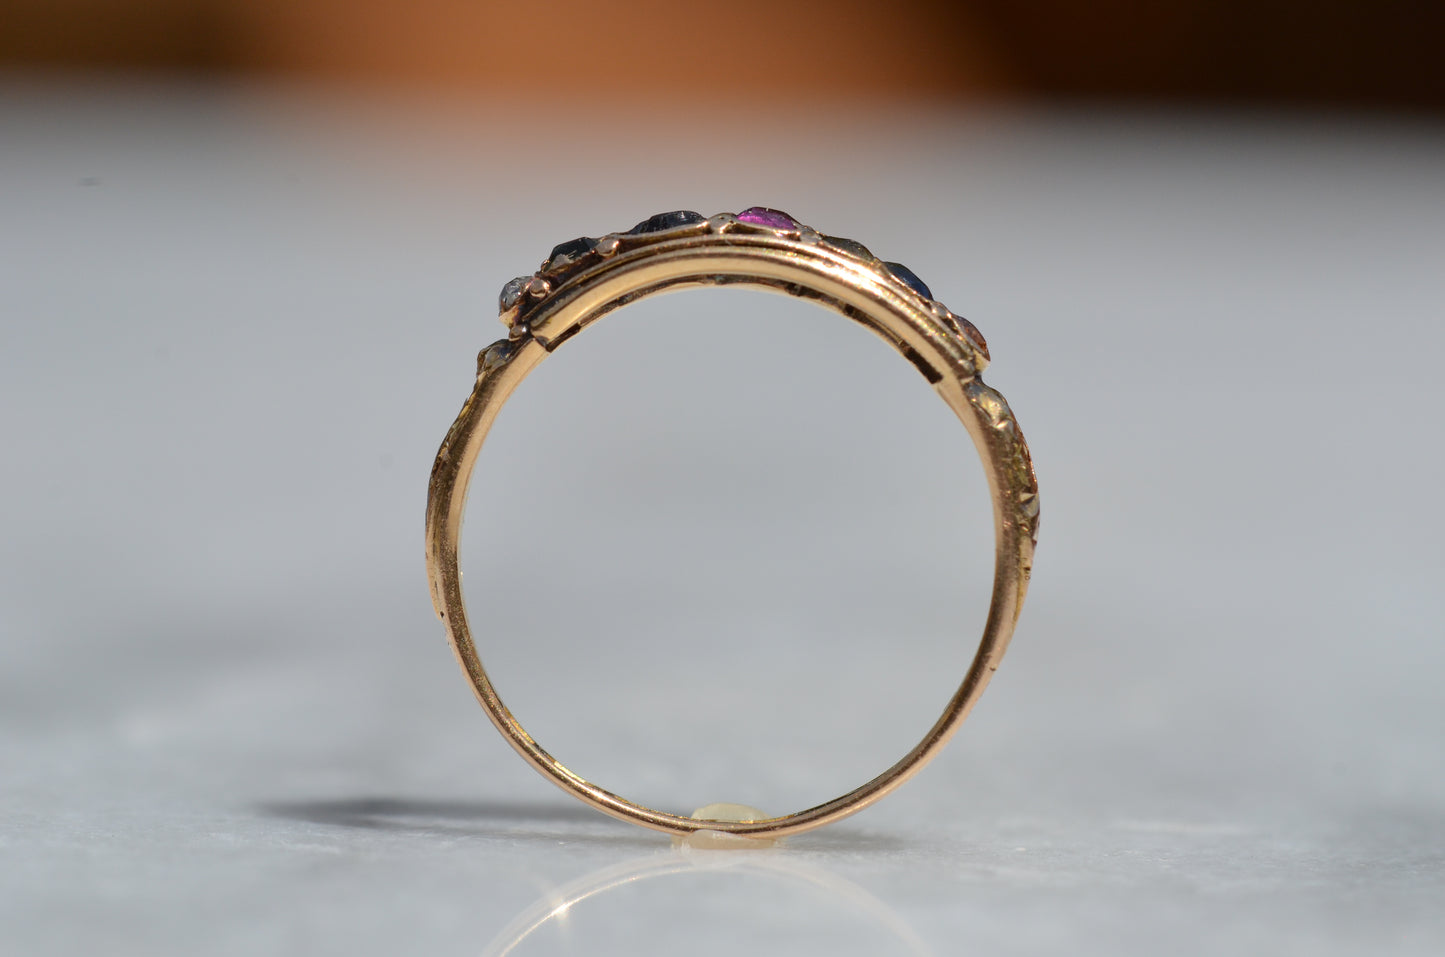 Sentimental Antique “Dearest” Acrostic Ring